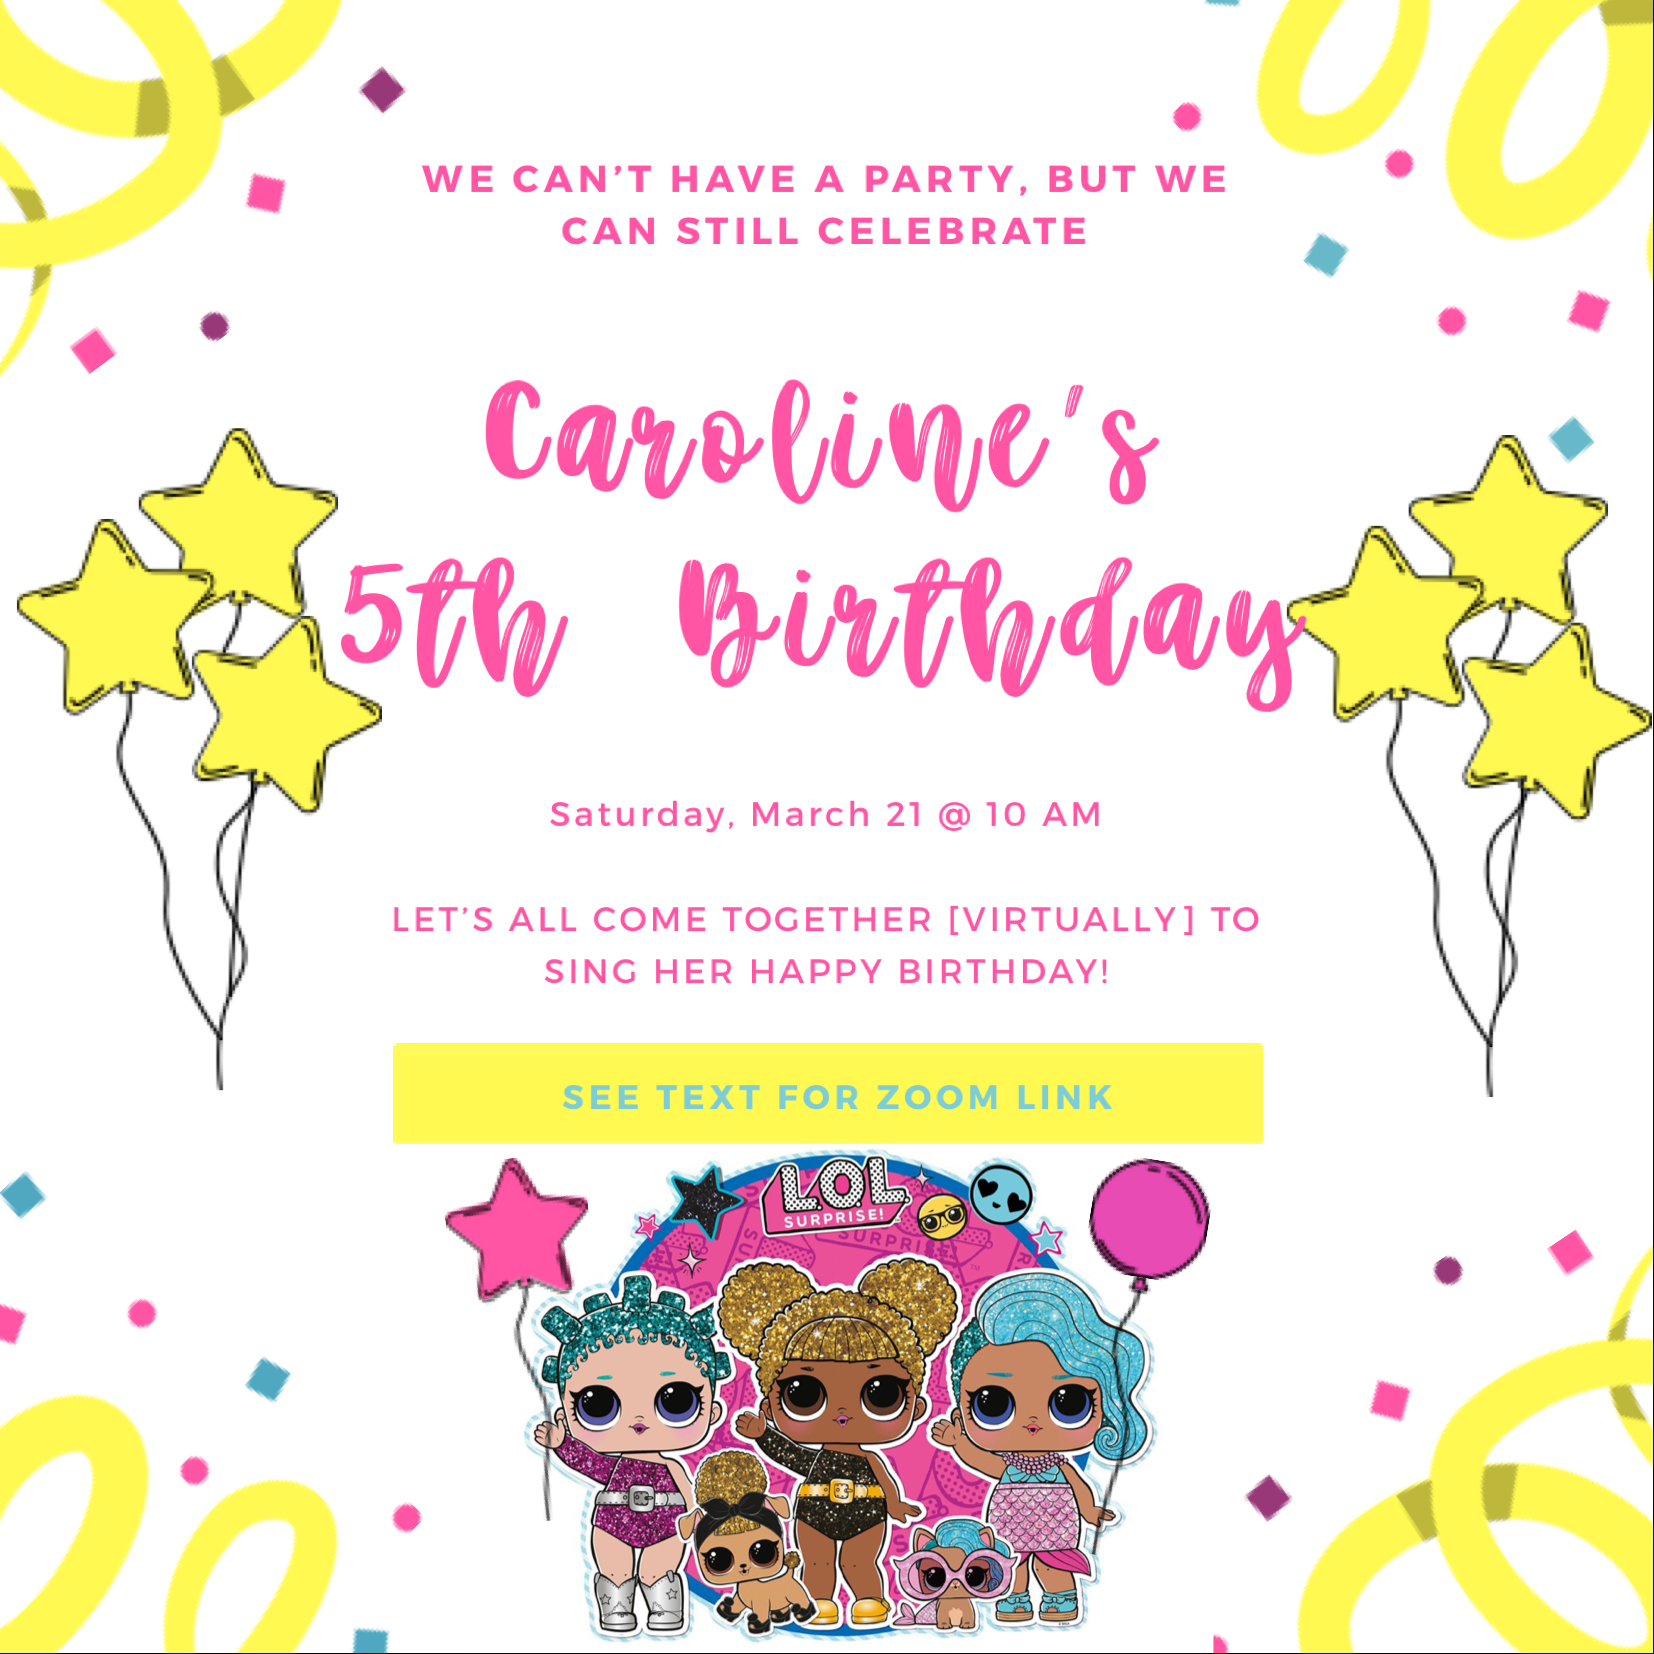 Celebrating Birthdays During Social Isolation: 4 Tips for Making it Special Miami Moms Blog Becky Salgado Contributor